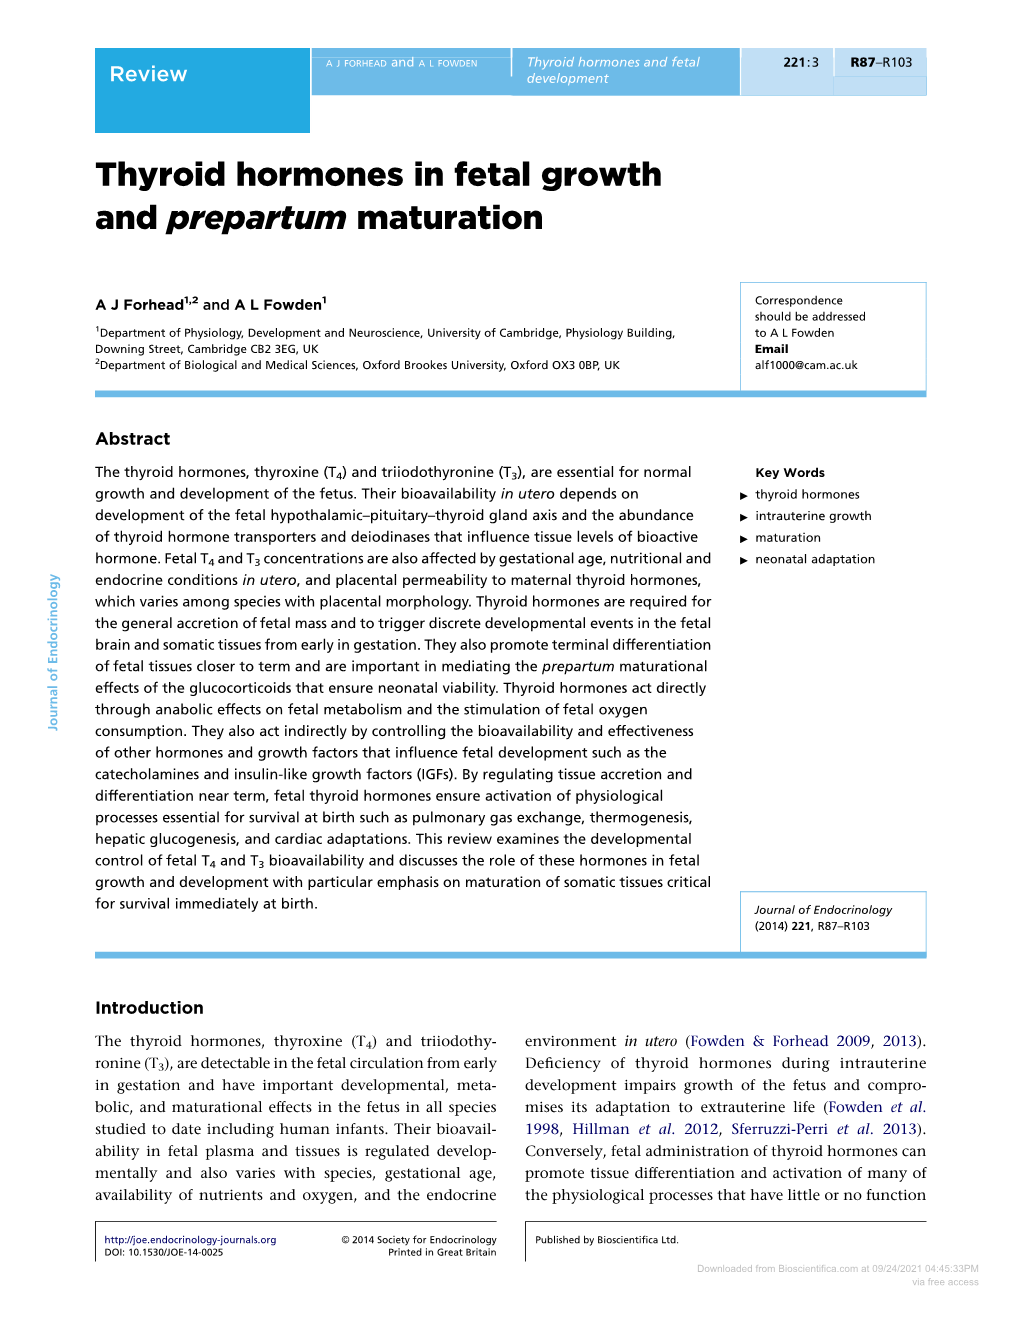 Thyroid Hormones in Fetal Growth and Prepartum Maturation